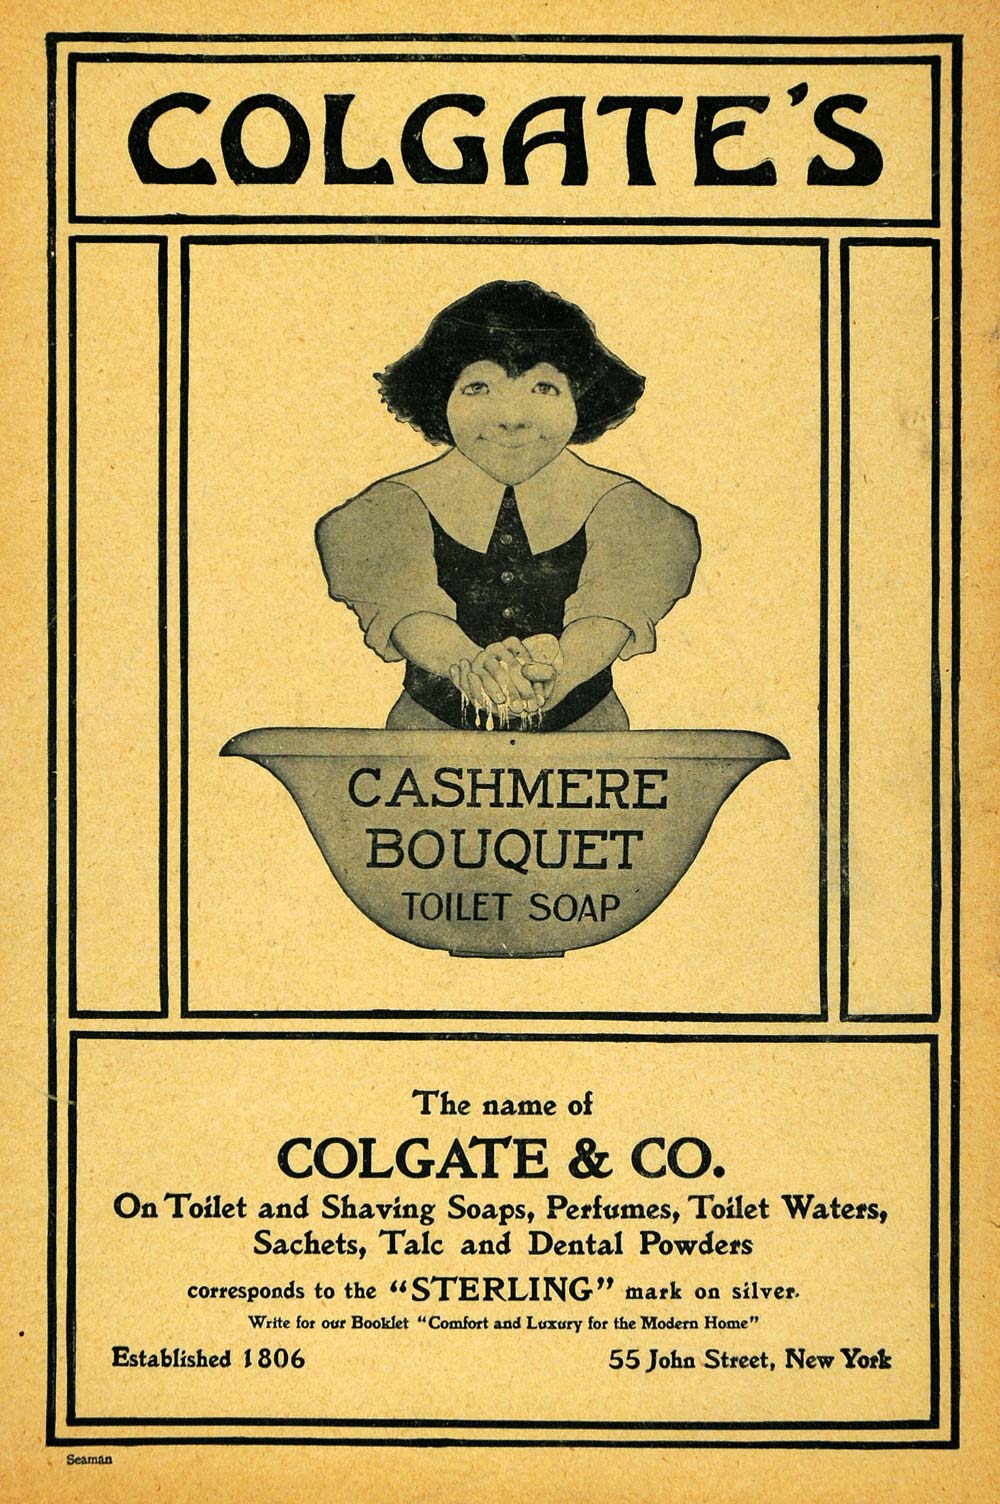 1904 Ad Colgate & Company Cashmere Bouquet Toilet Soap - ORIGINAL TOM1